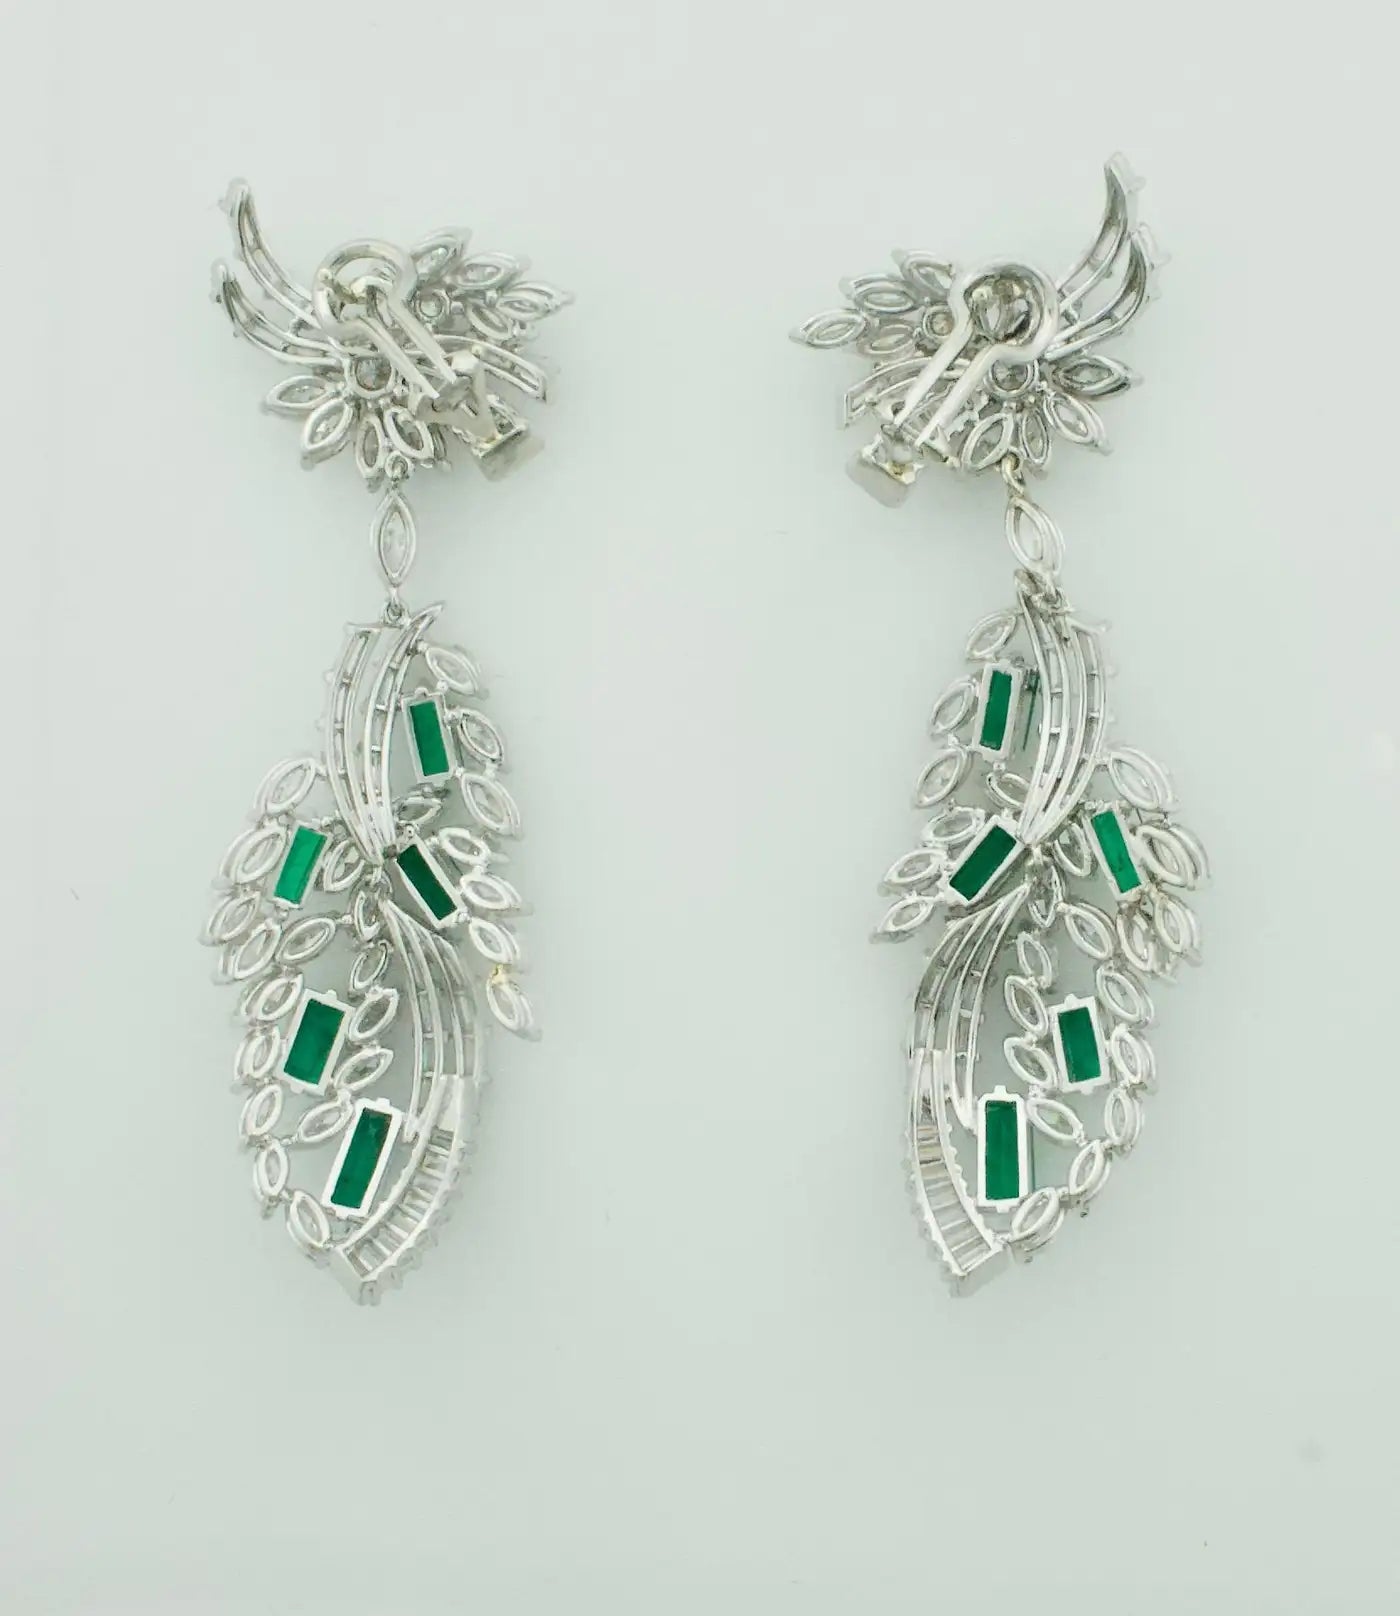 Circa 1950's Dangling Diamond and Emerald Earrings in Platinum